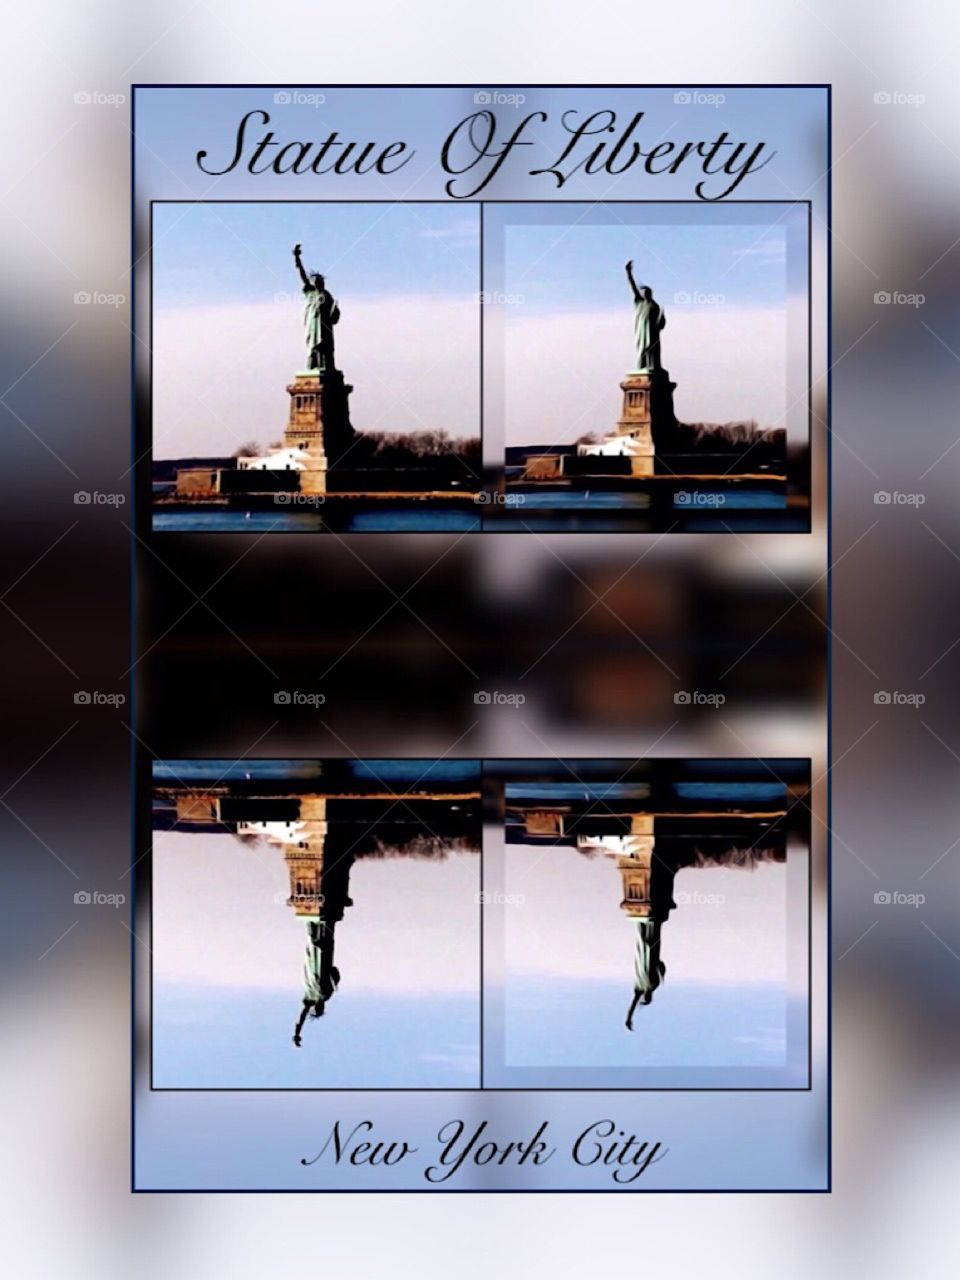 Statue Of Liberty -New York City